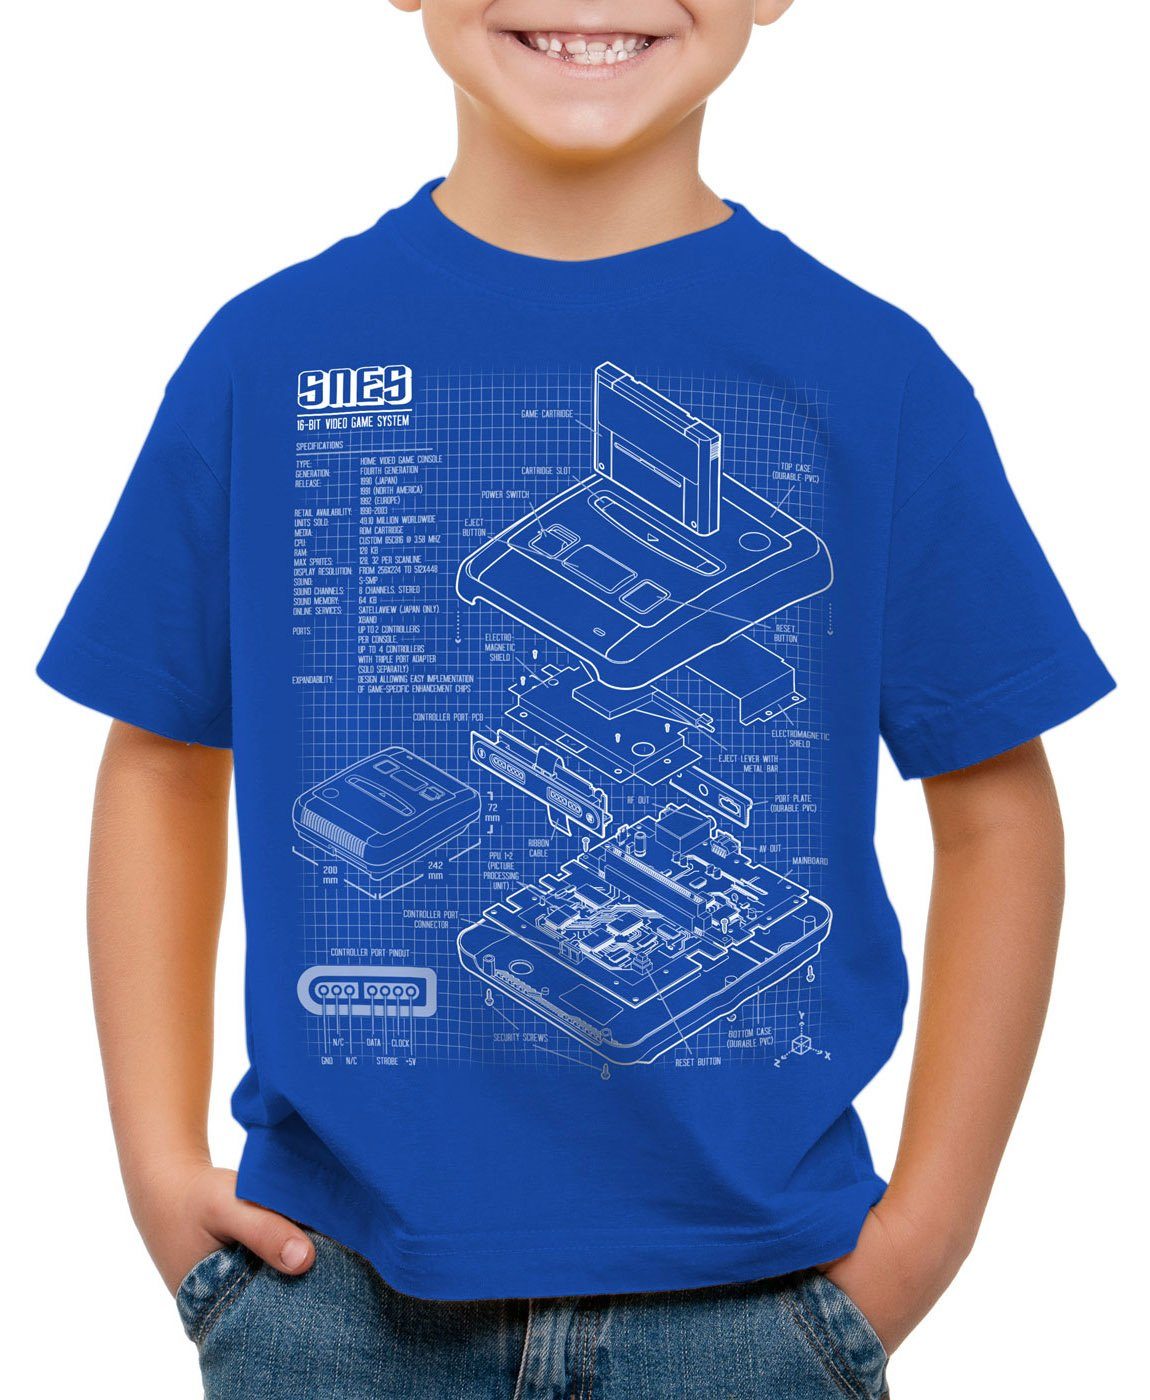 style3 Print-Shirt Kinder T-Shirt SNES Blaupause 16-Bit Videospiel